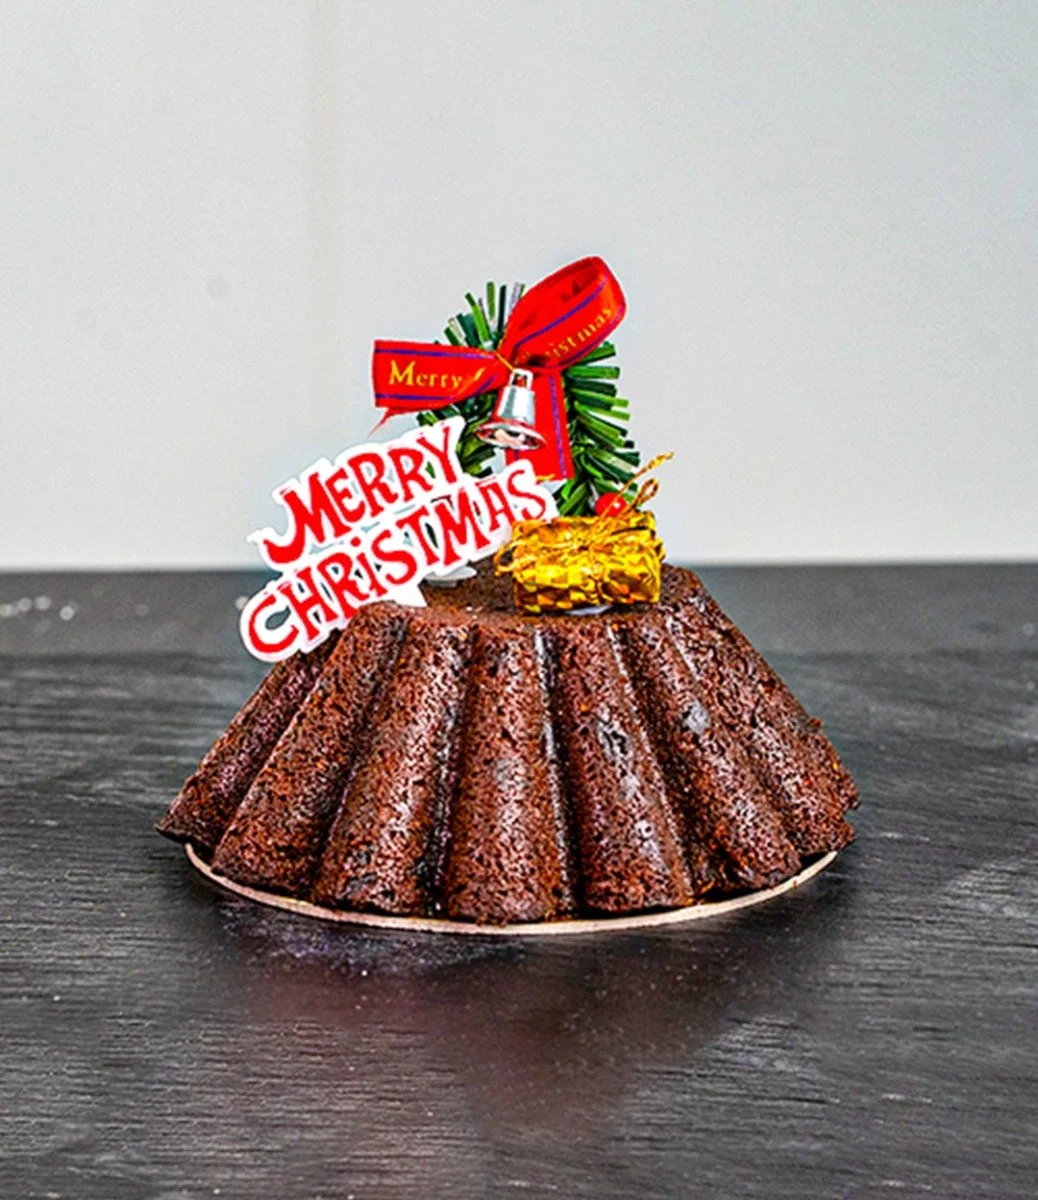 Sugar free Christmas Plum Pudding by Bloomsbury's